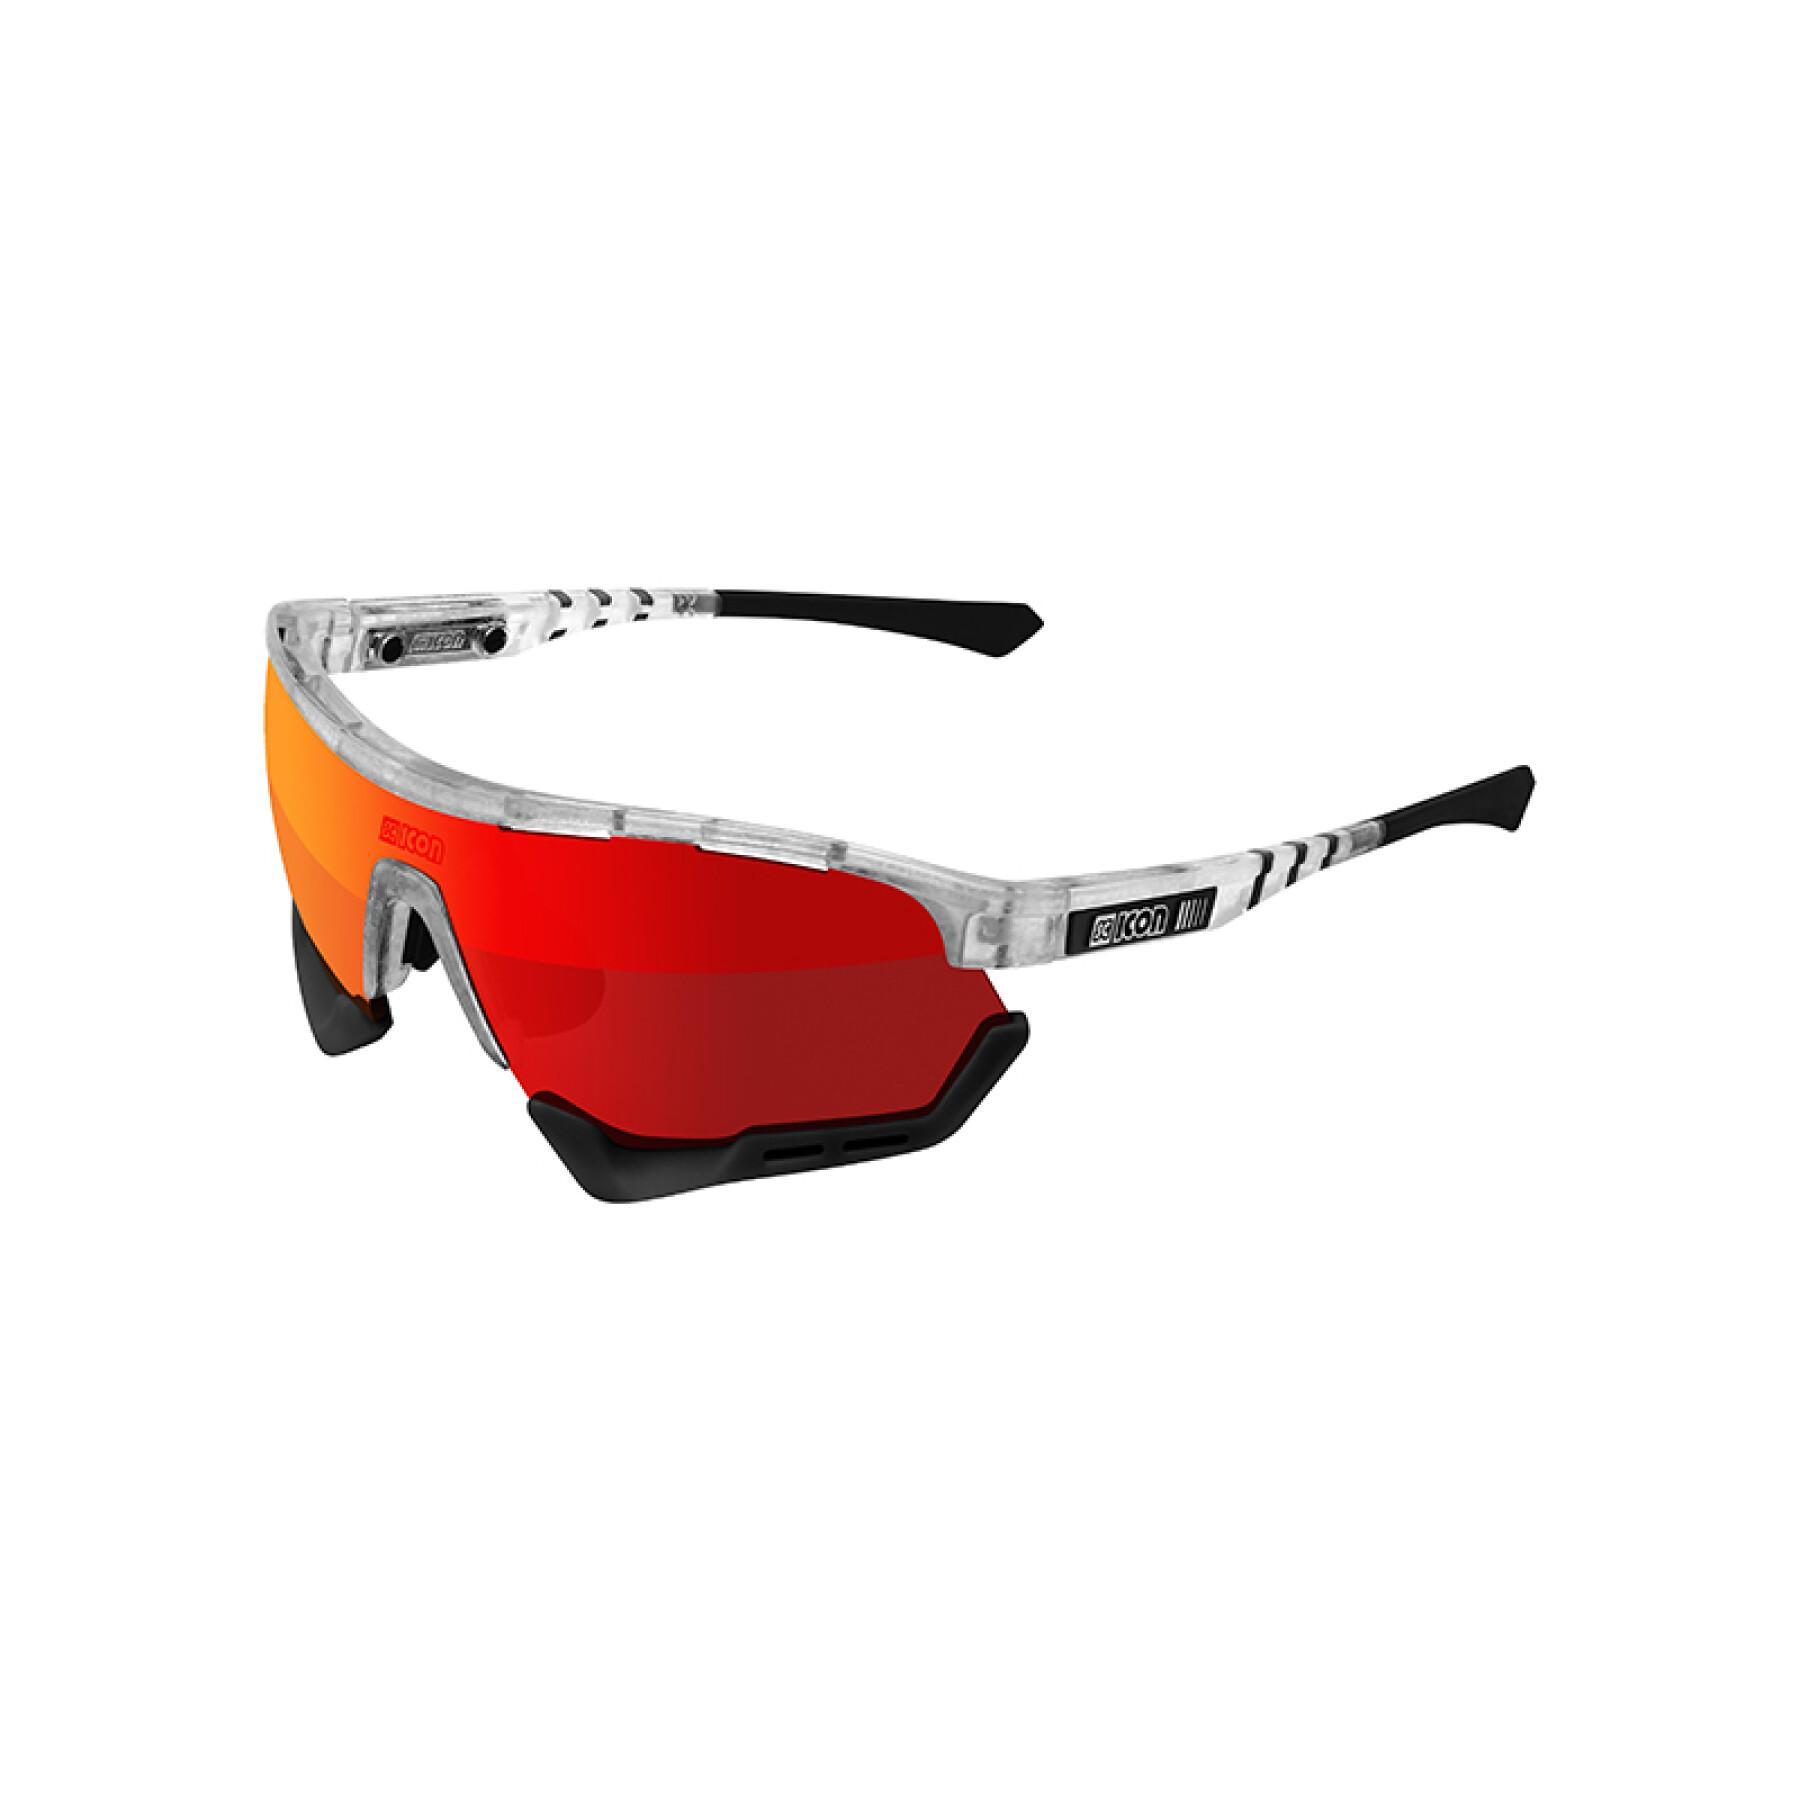 Okulary Scicon aerotech scnpp verre multi-reflet rouges